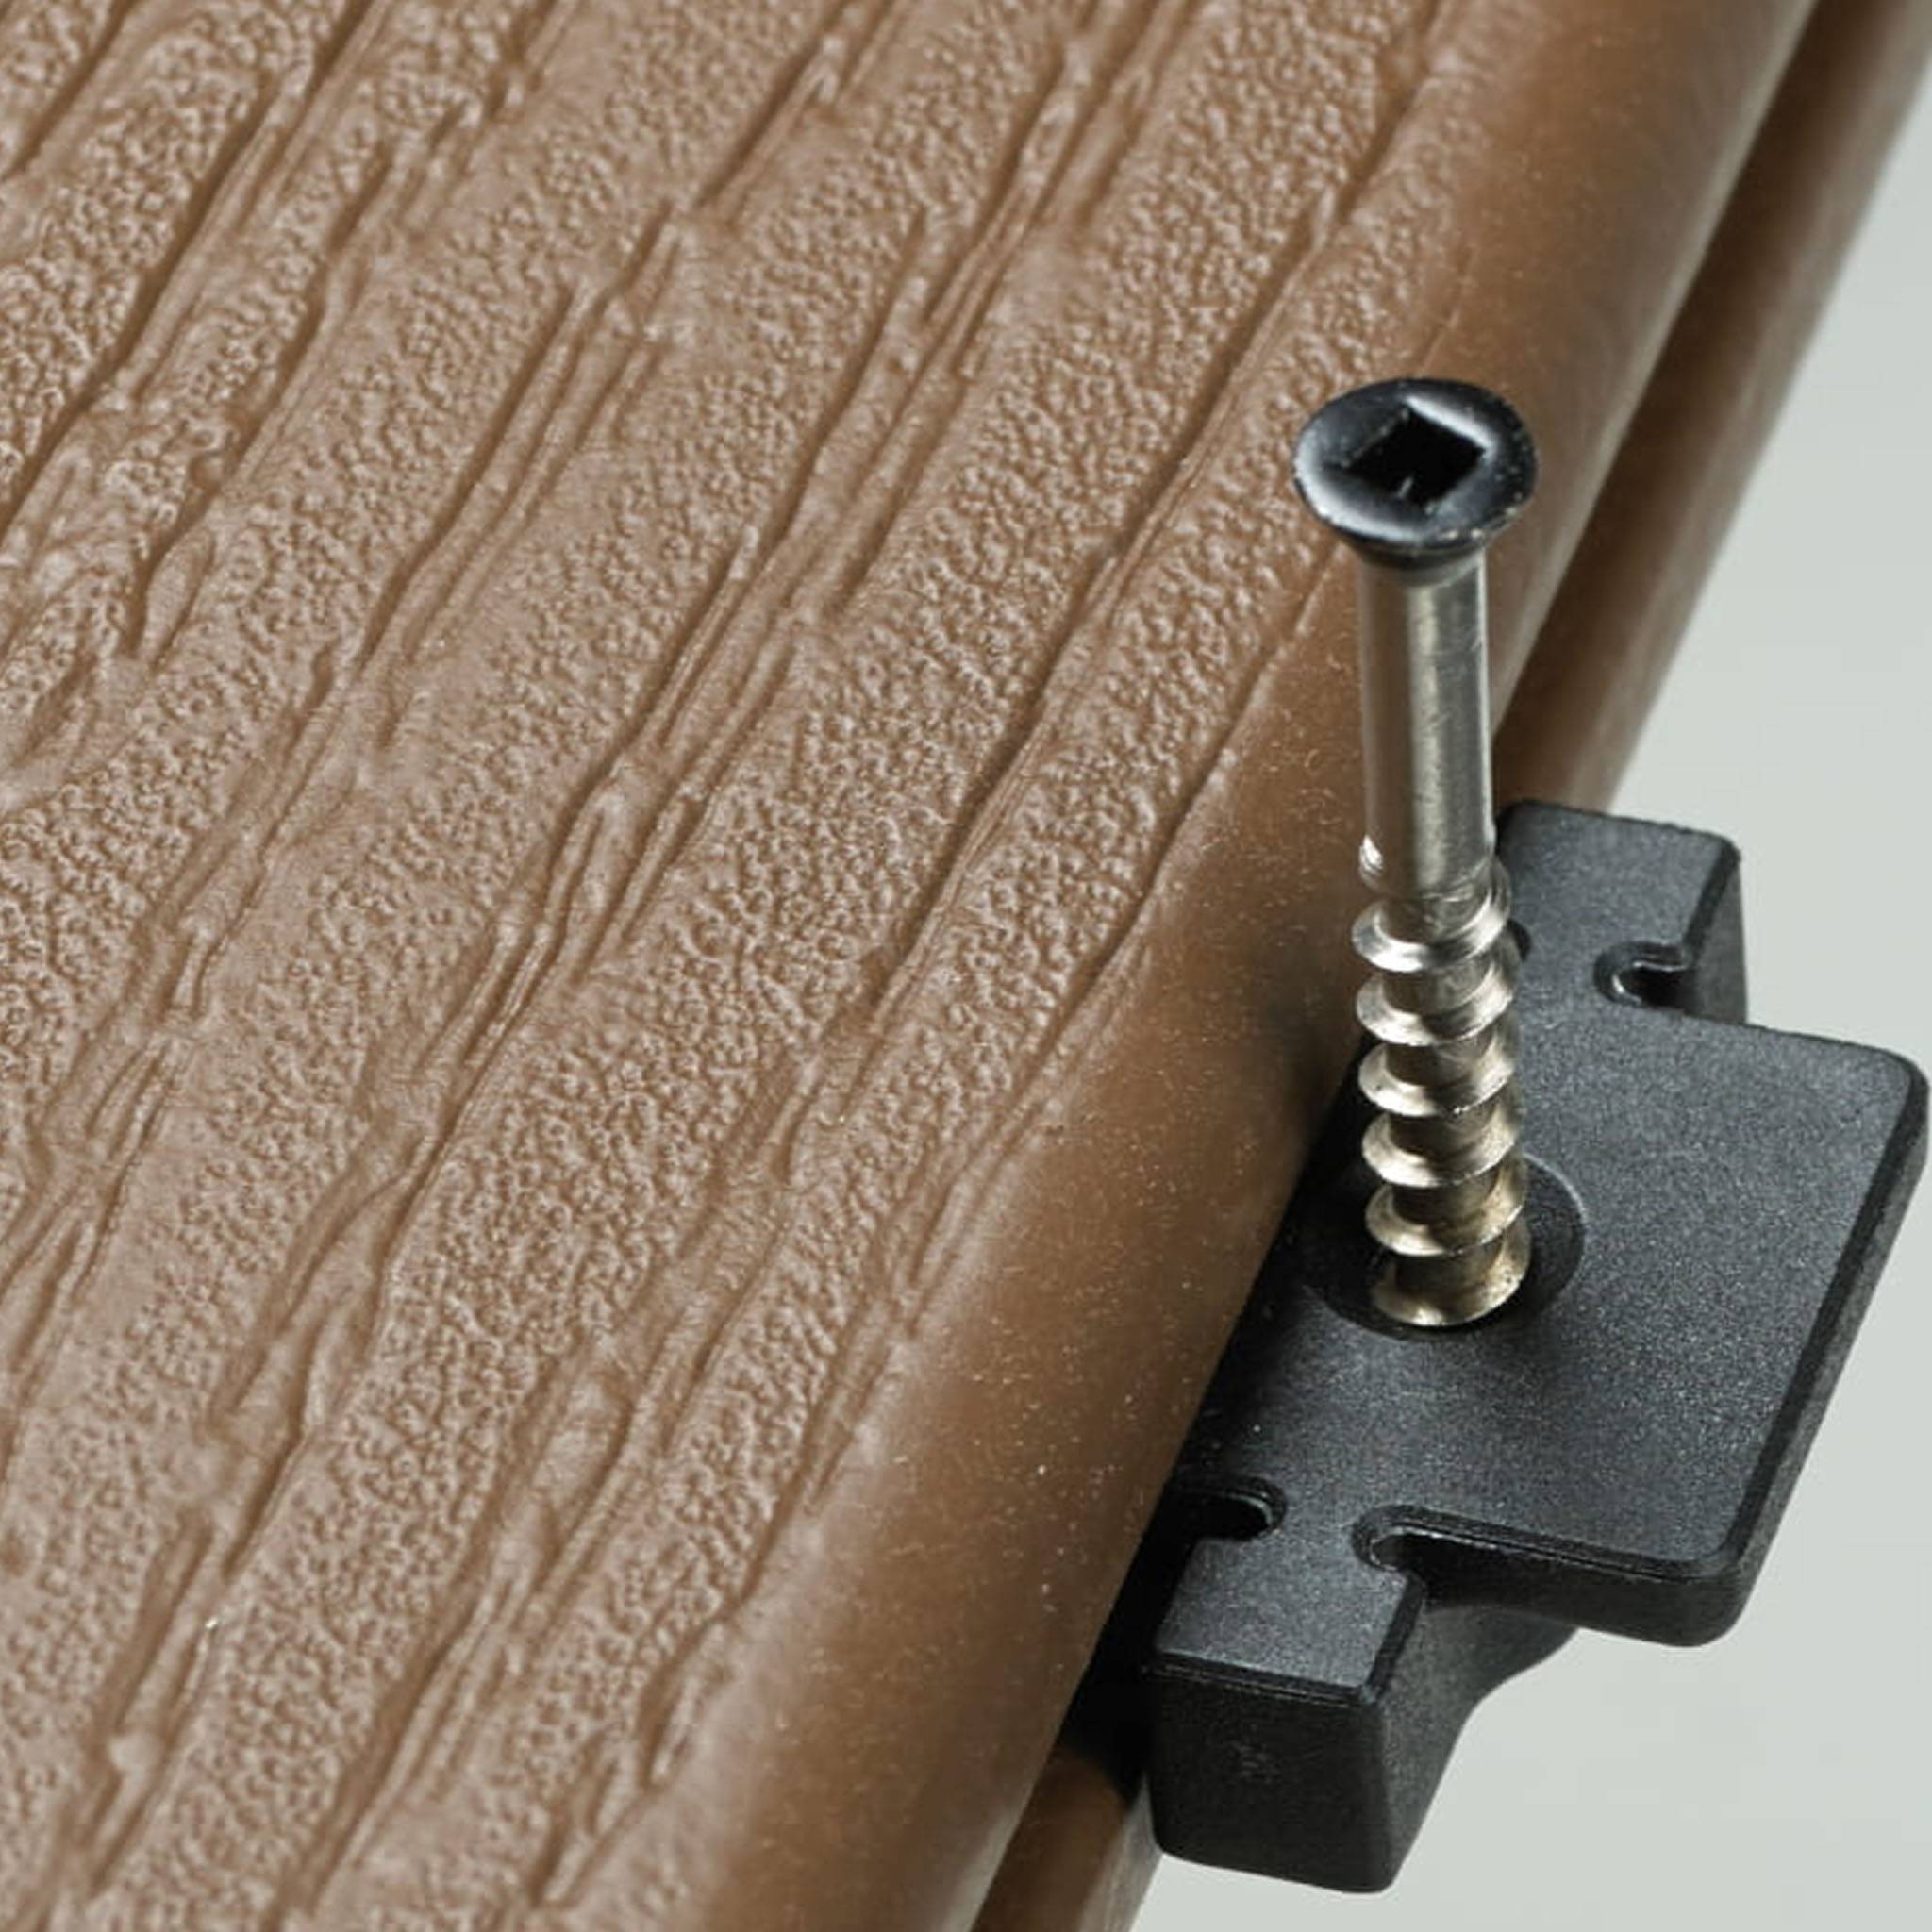 Stowaway hidden fastener in grooved edge deck board